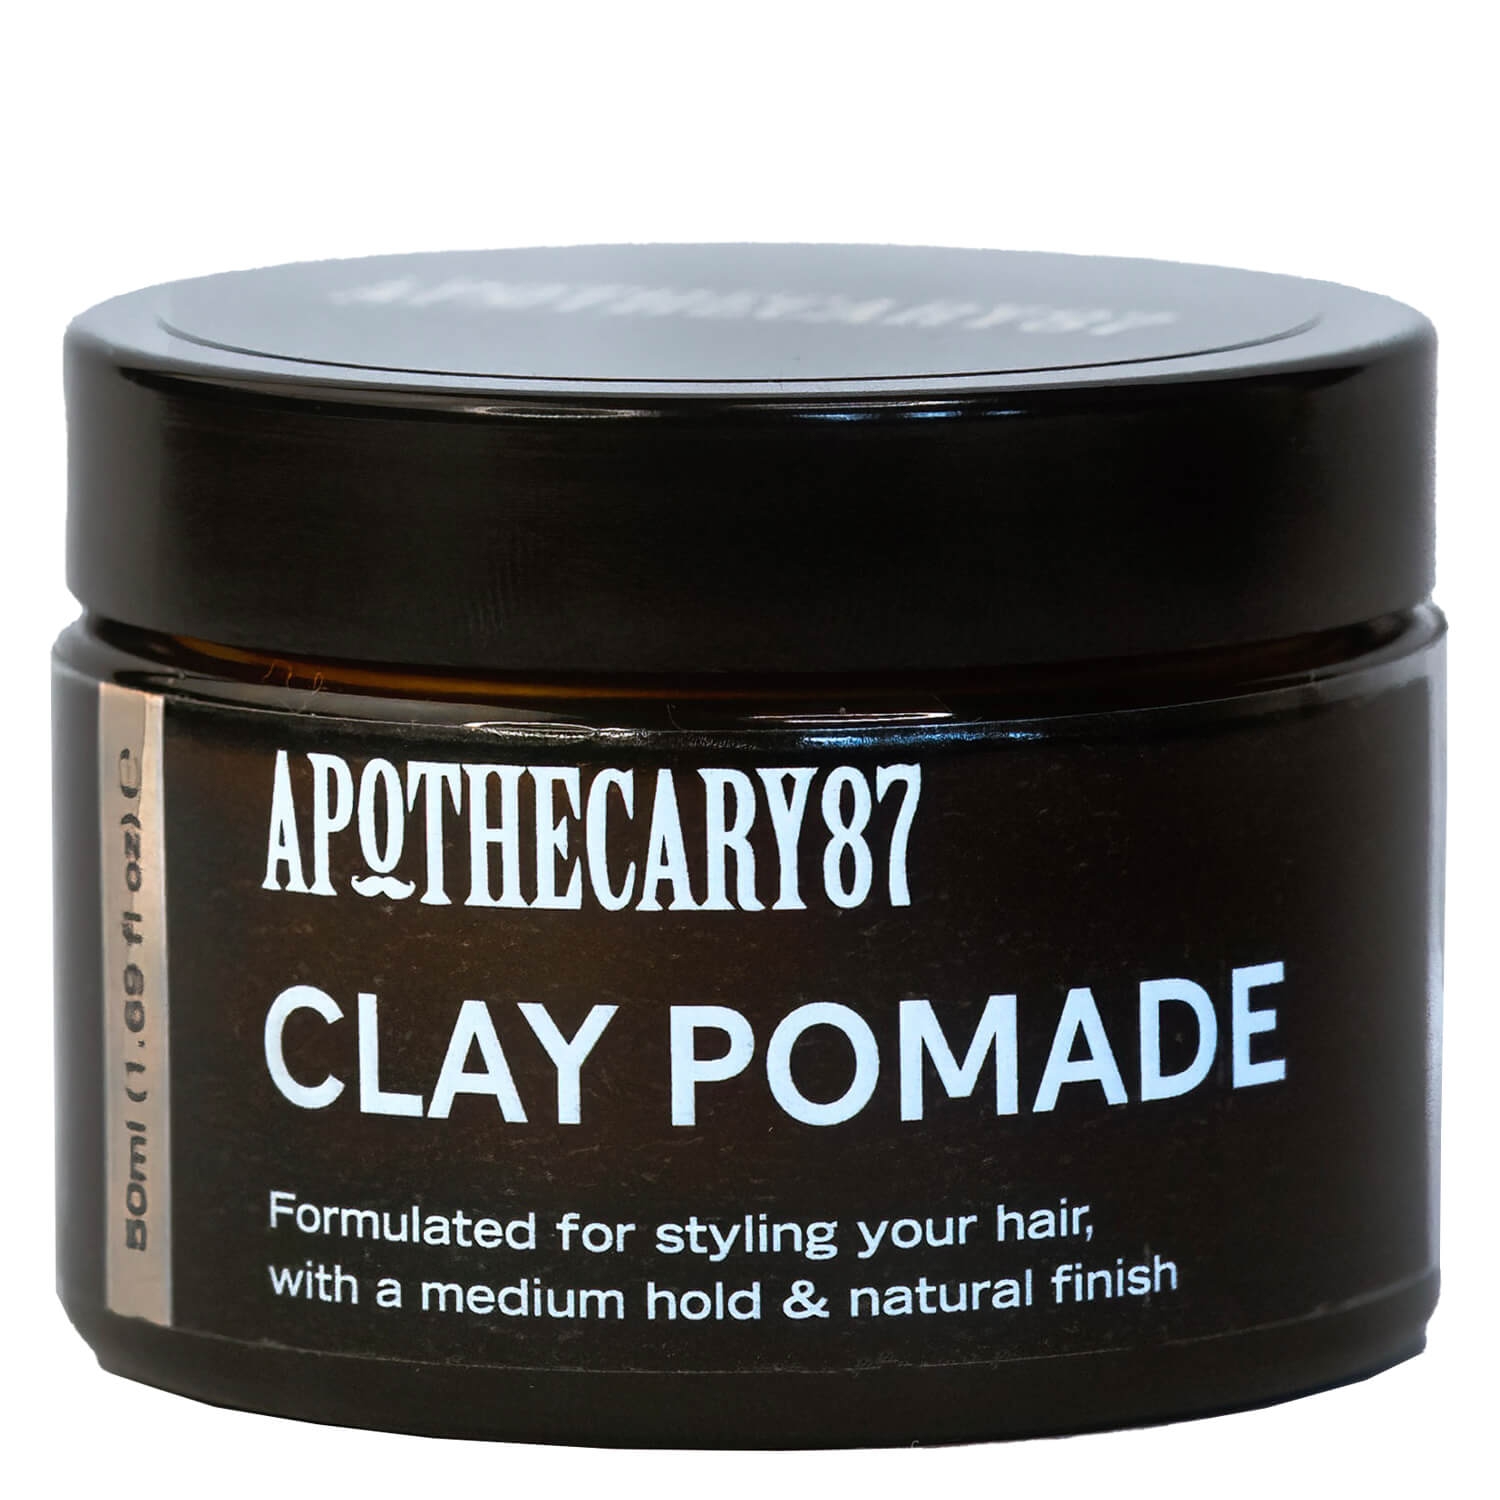 Produktbild von Apothecary87 Grooming - Clay Pomade Vanilla & Mango